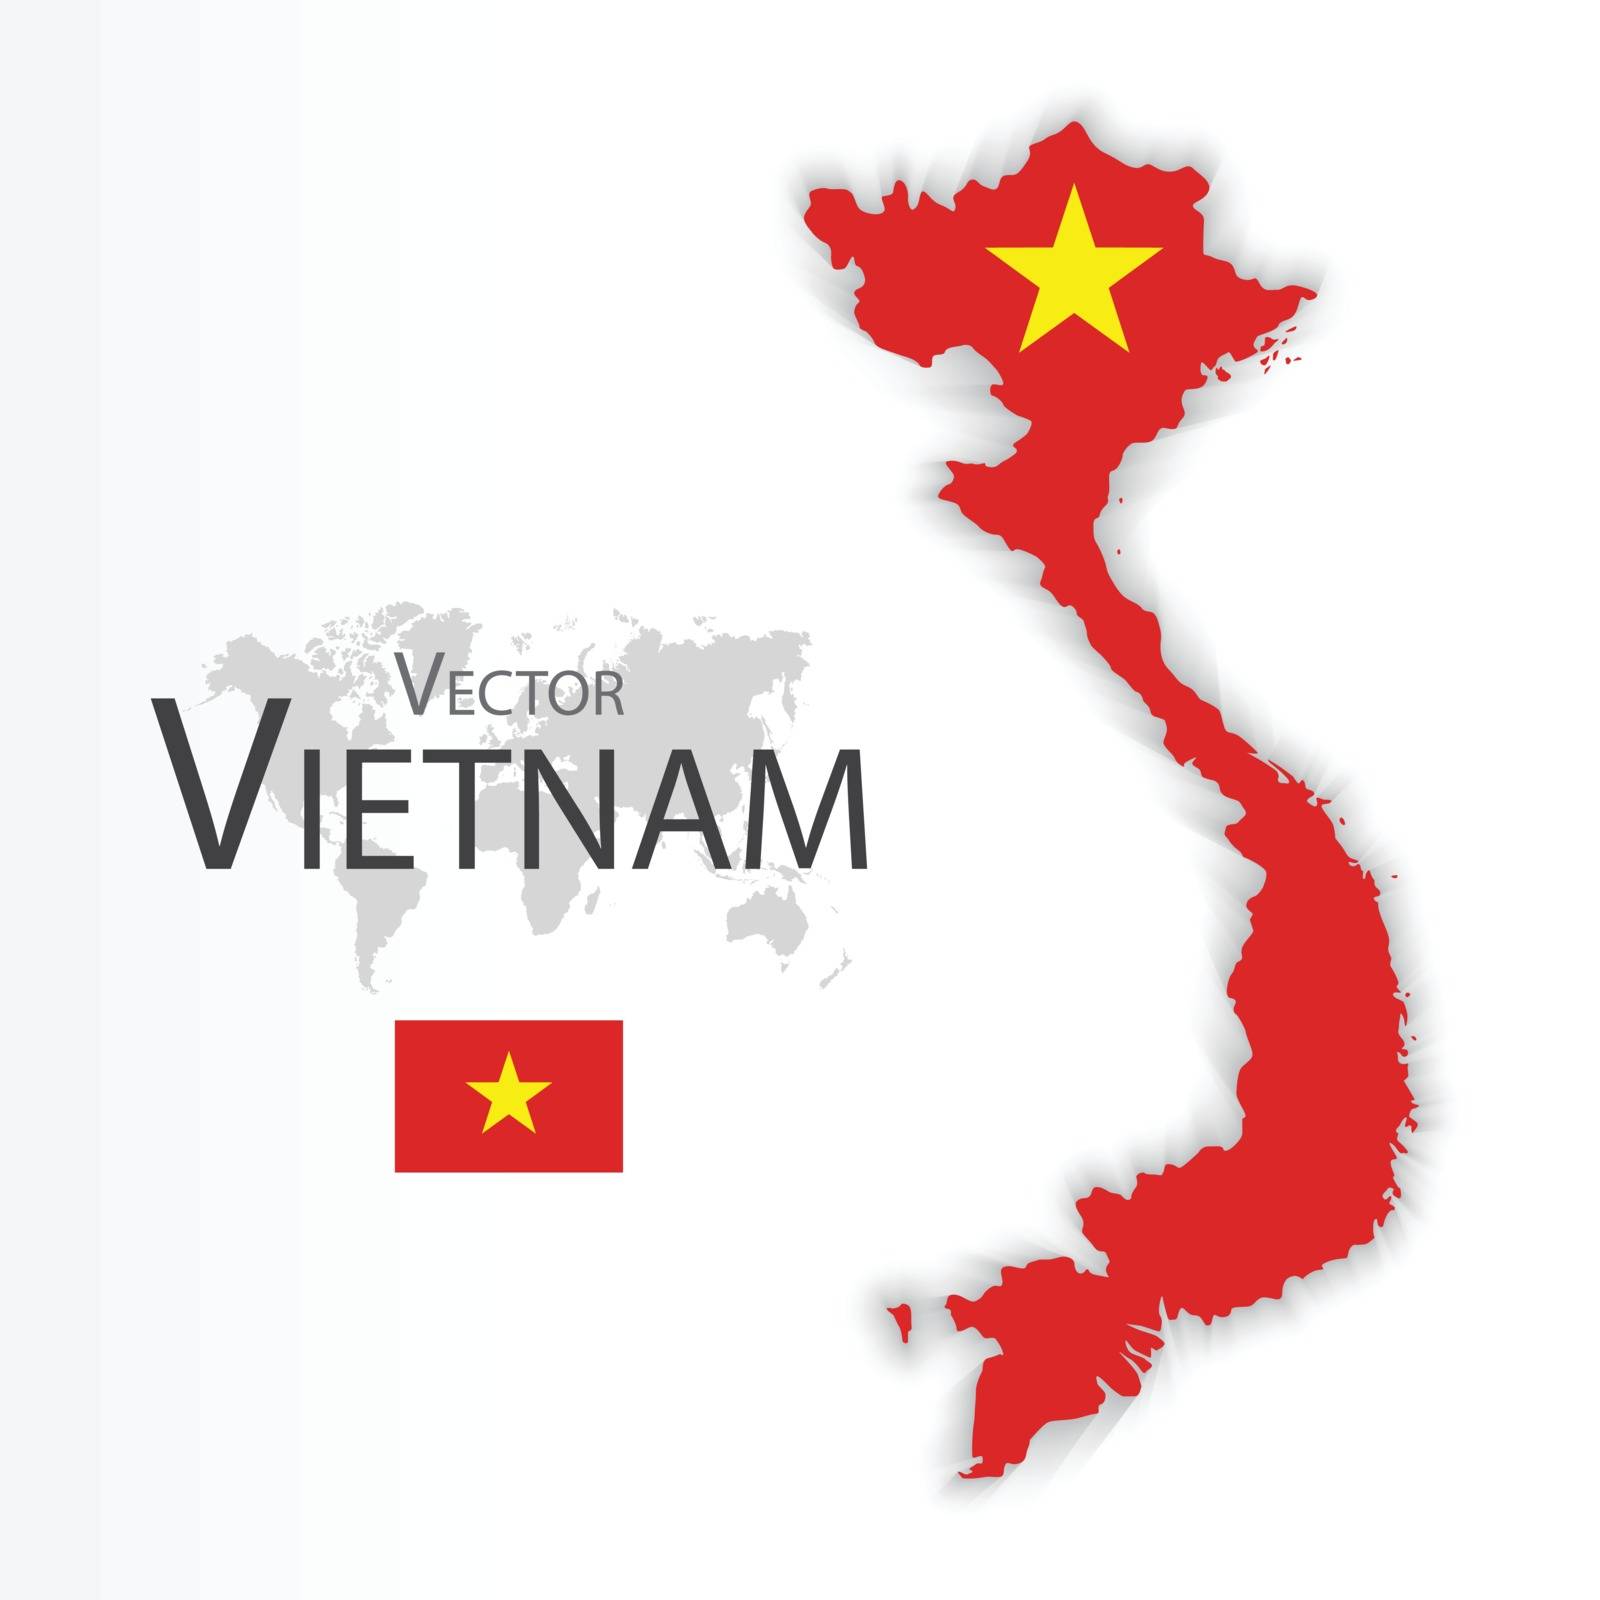 Vietnam ( Socialist Republic of Vietnam )( flag and map )( Transportation and tourism concept ) , vietnam is one of AEC ( ASEAN Economic Community )